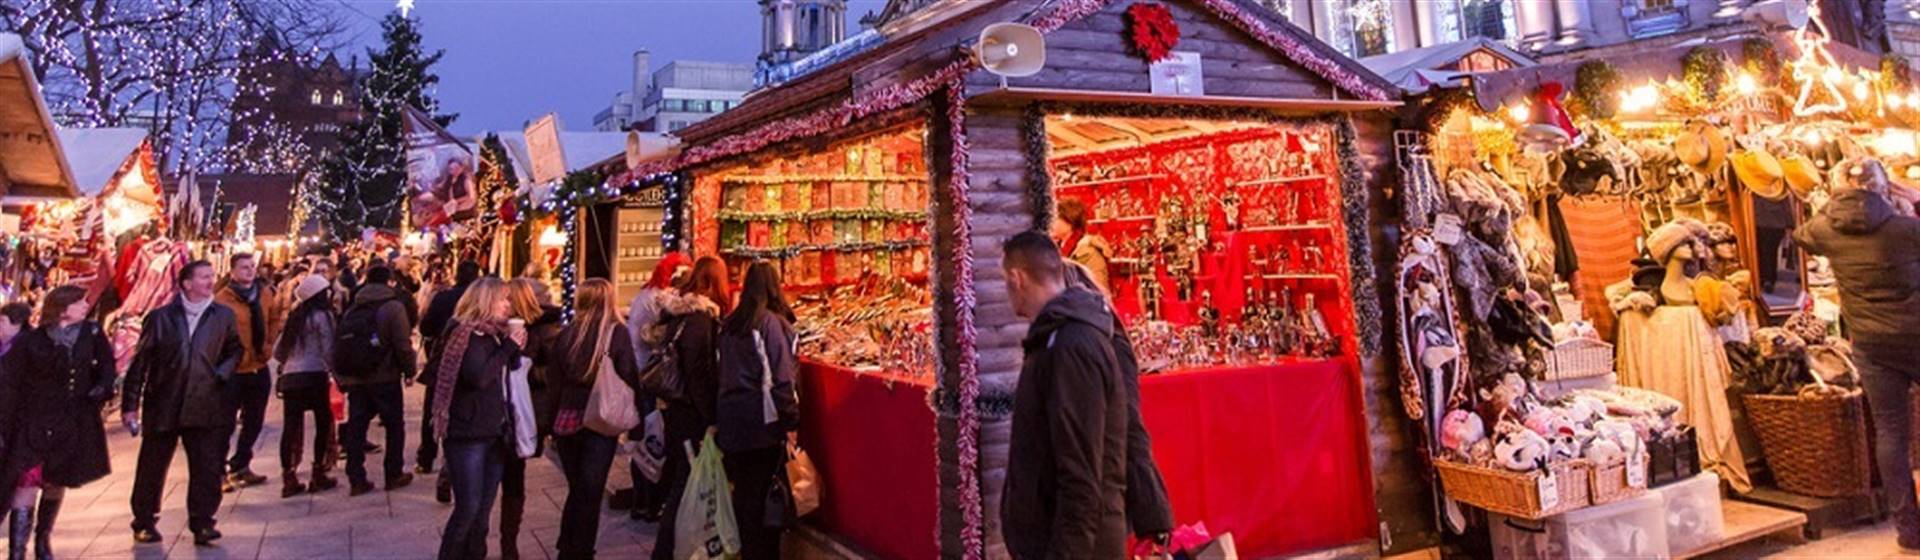 Belfast Christmas Markets 